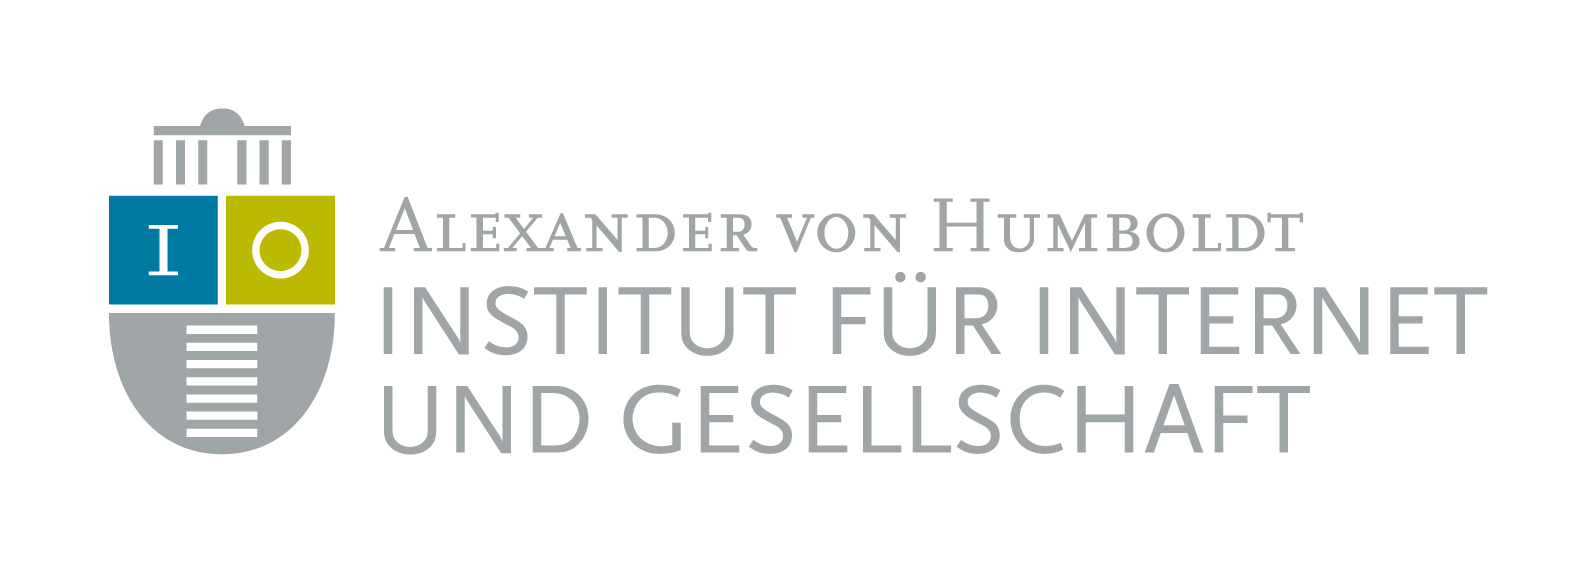 Alexander von Humboldt Institute for Internet and Society